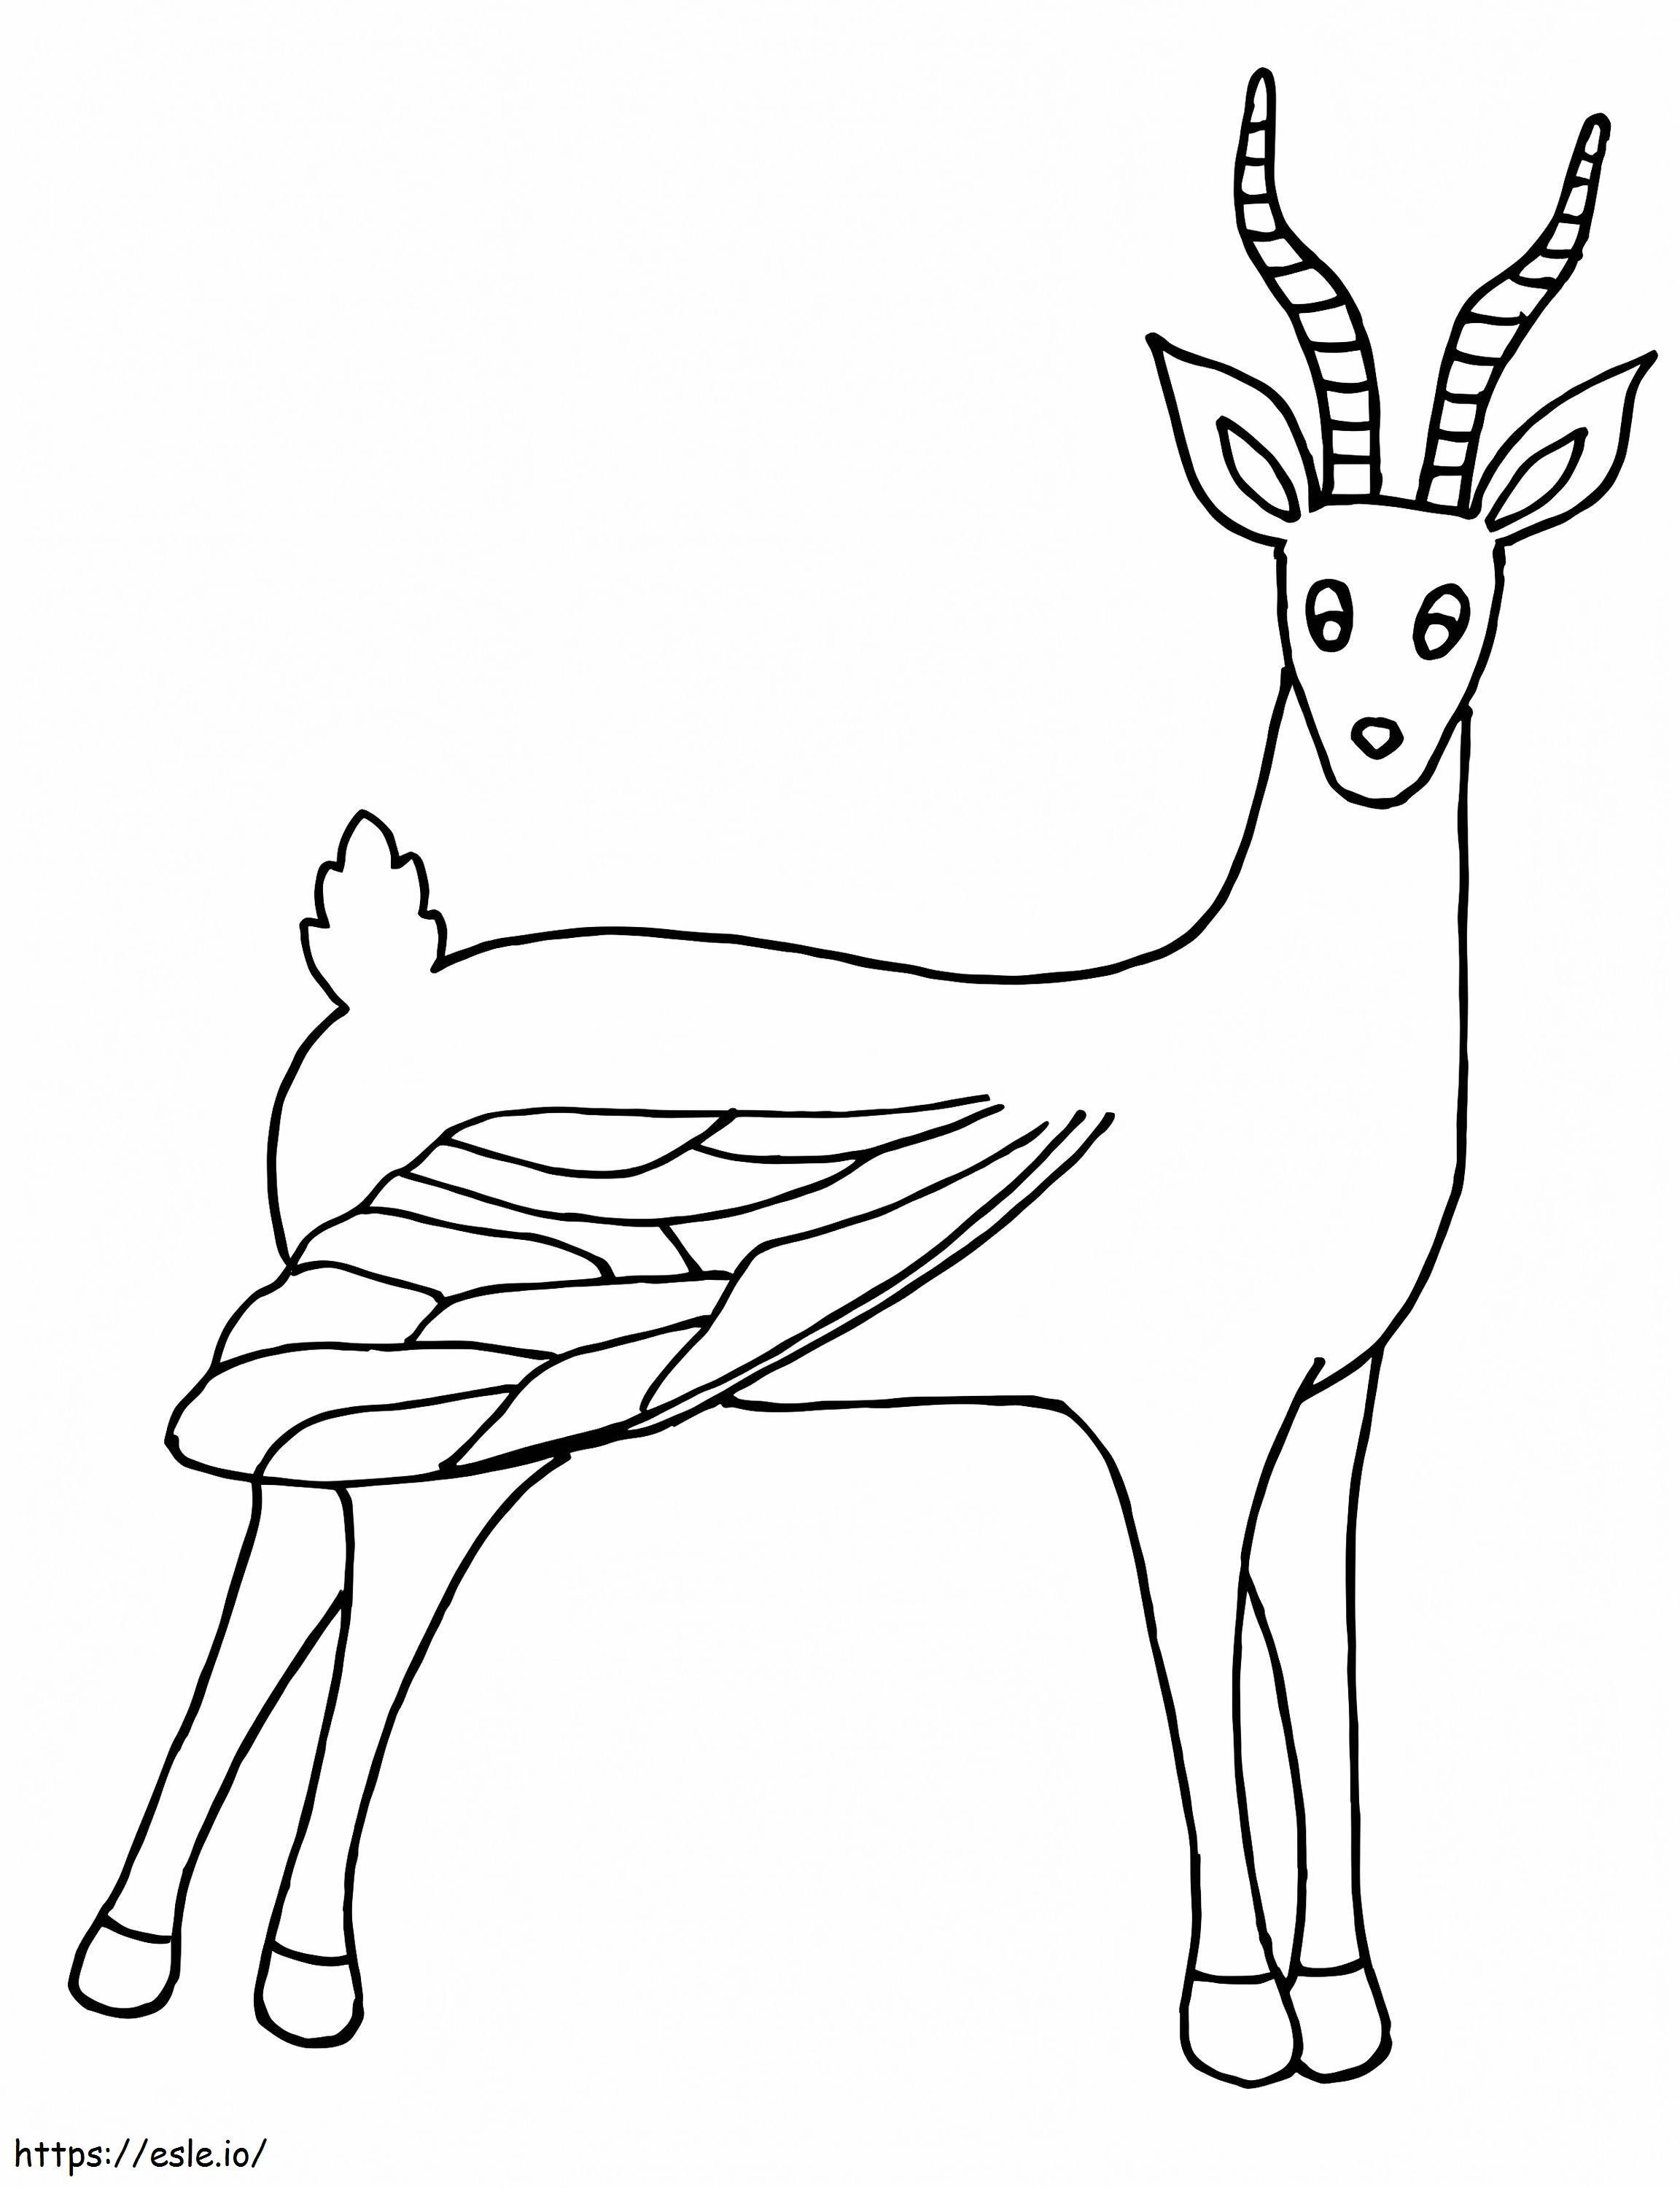 Gazelle Alebrijes ausmalbilder